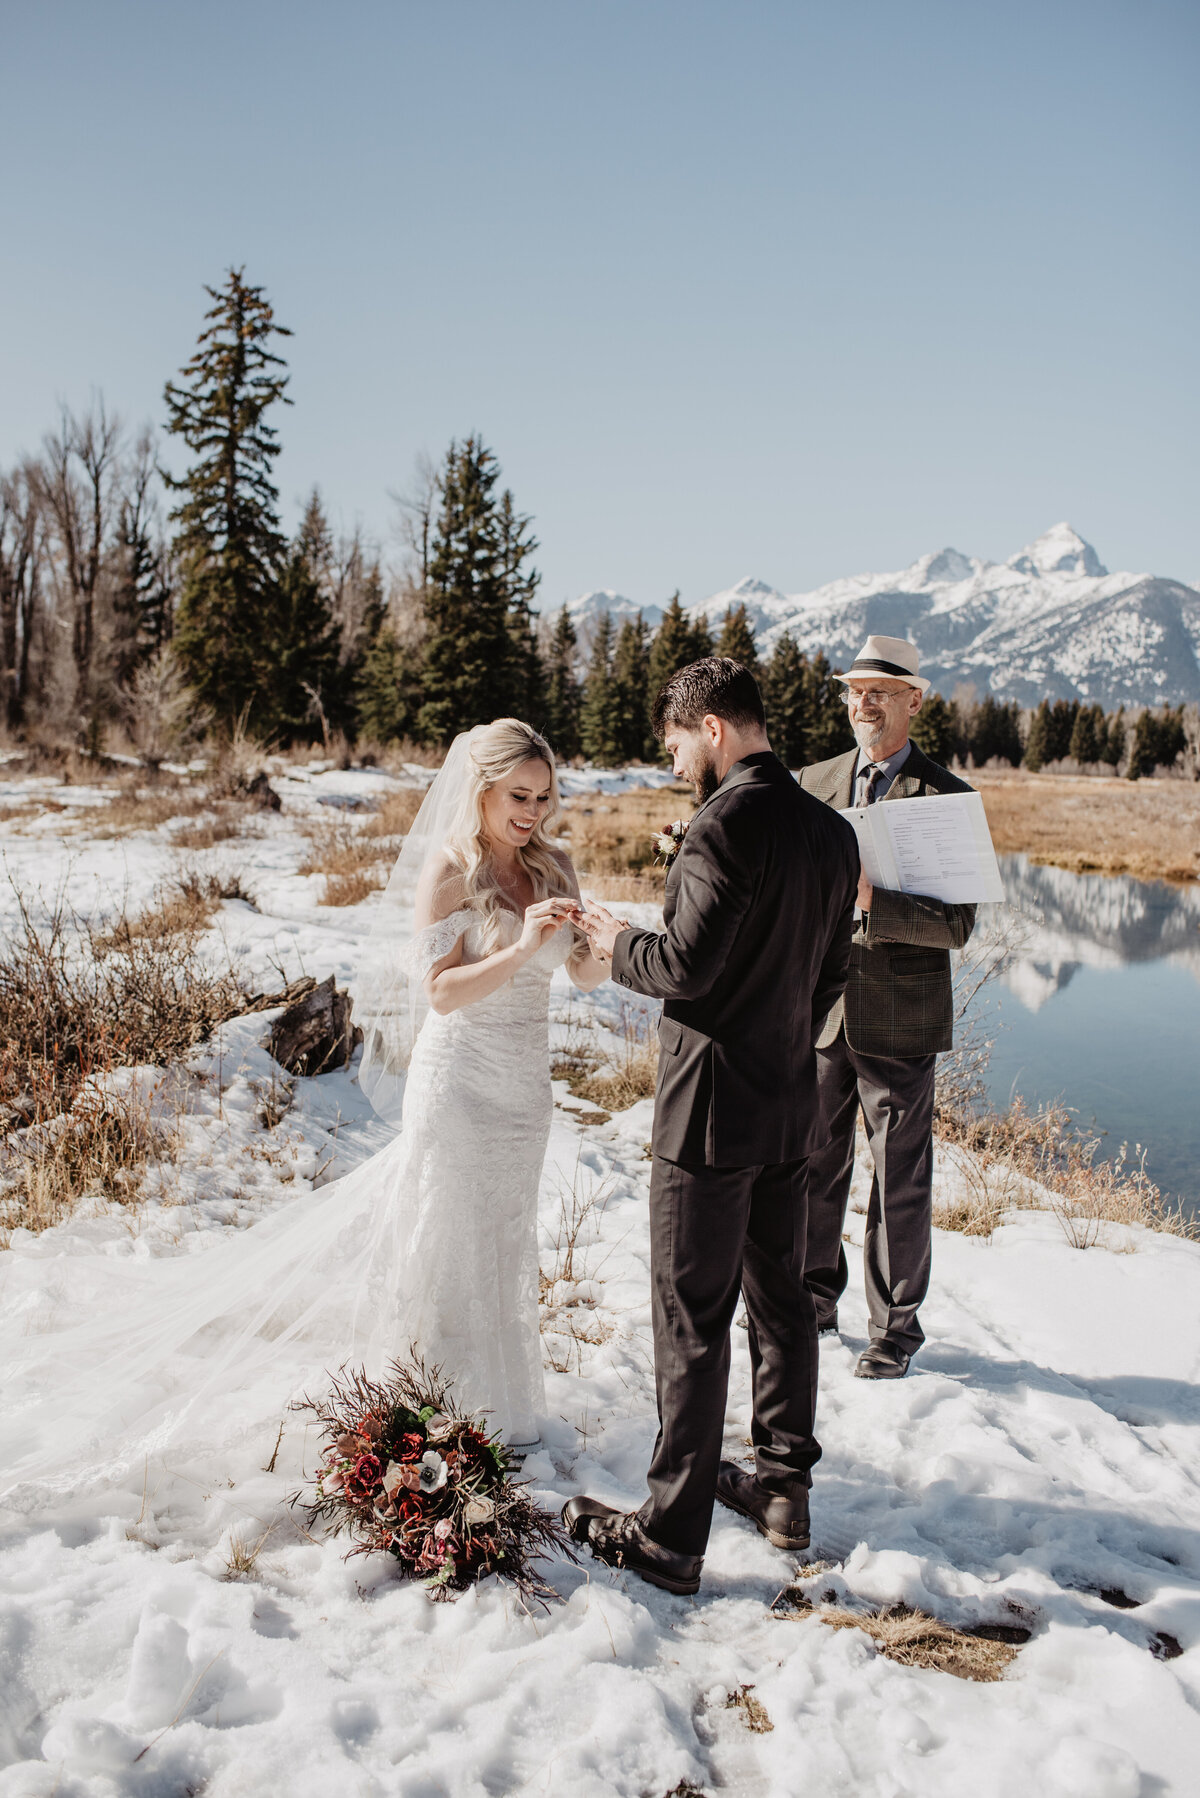 Jackson Hole Photographers capture bride putting ring on groom